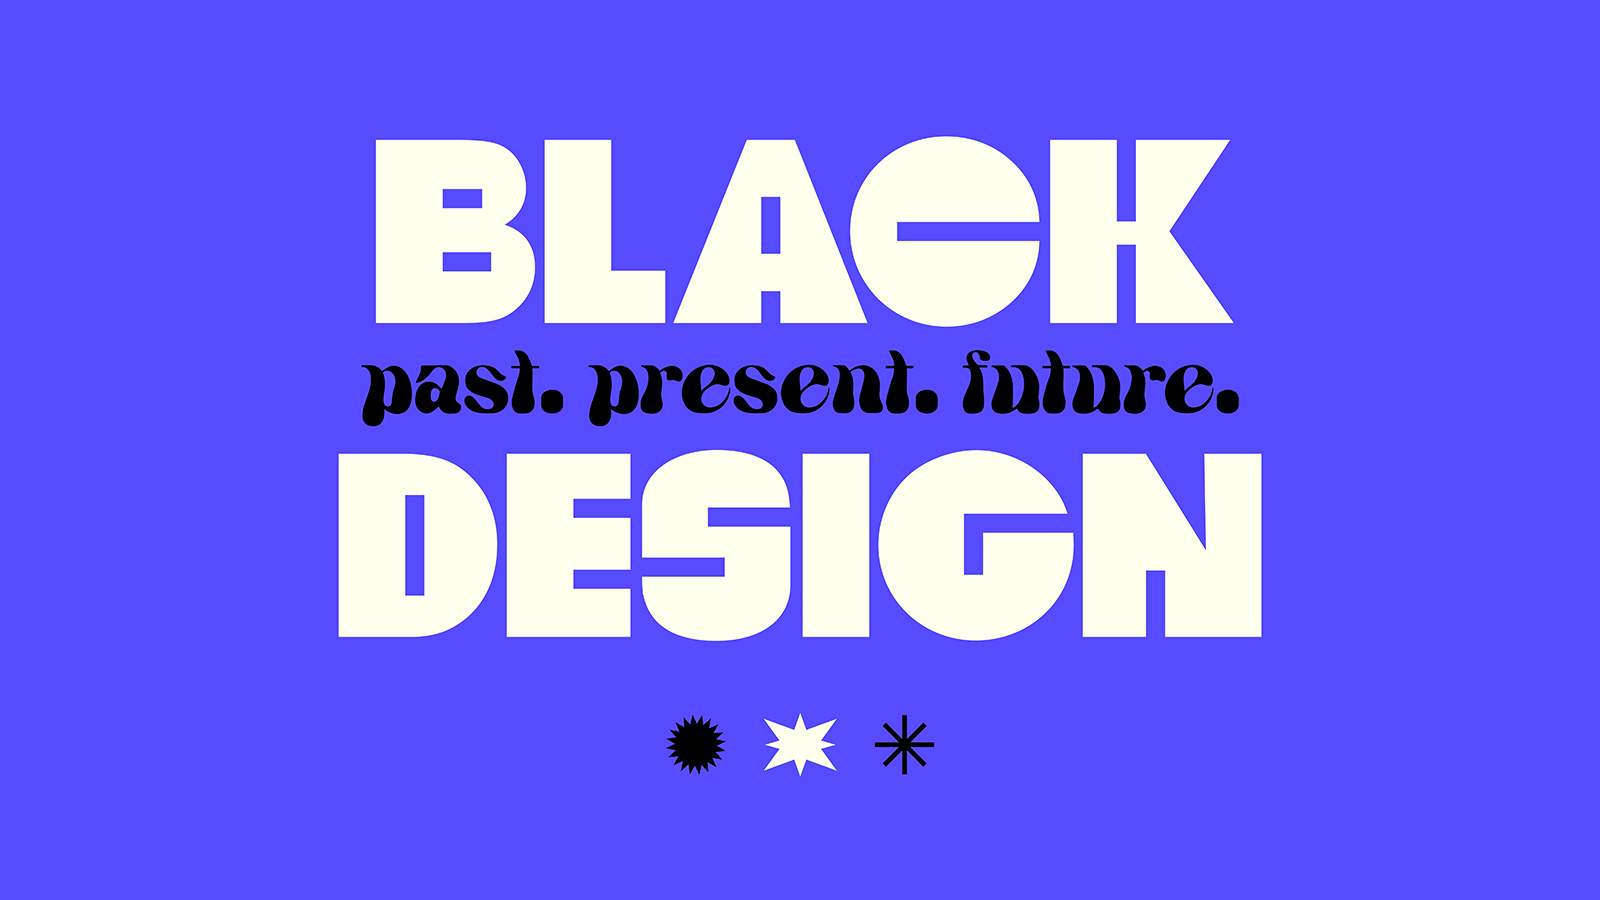 "black design" in white text on purple background